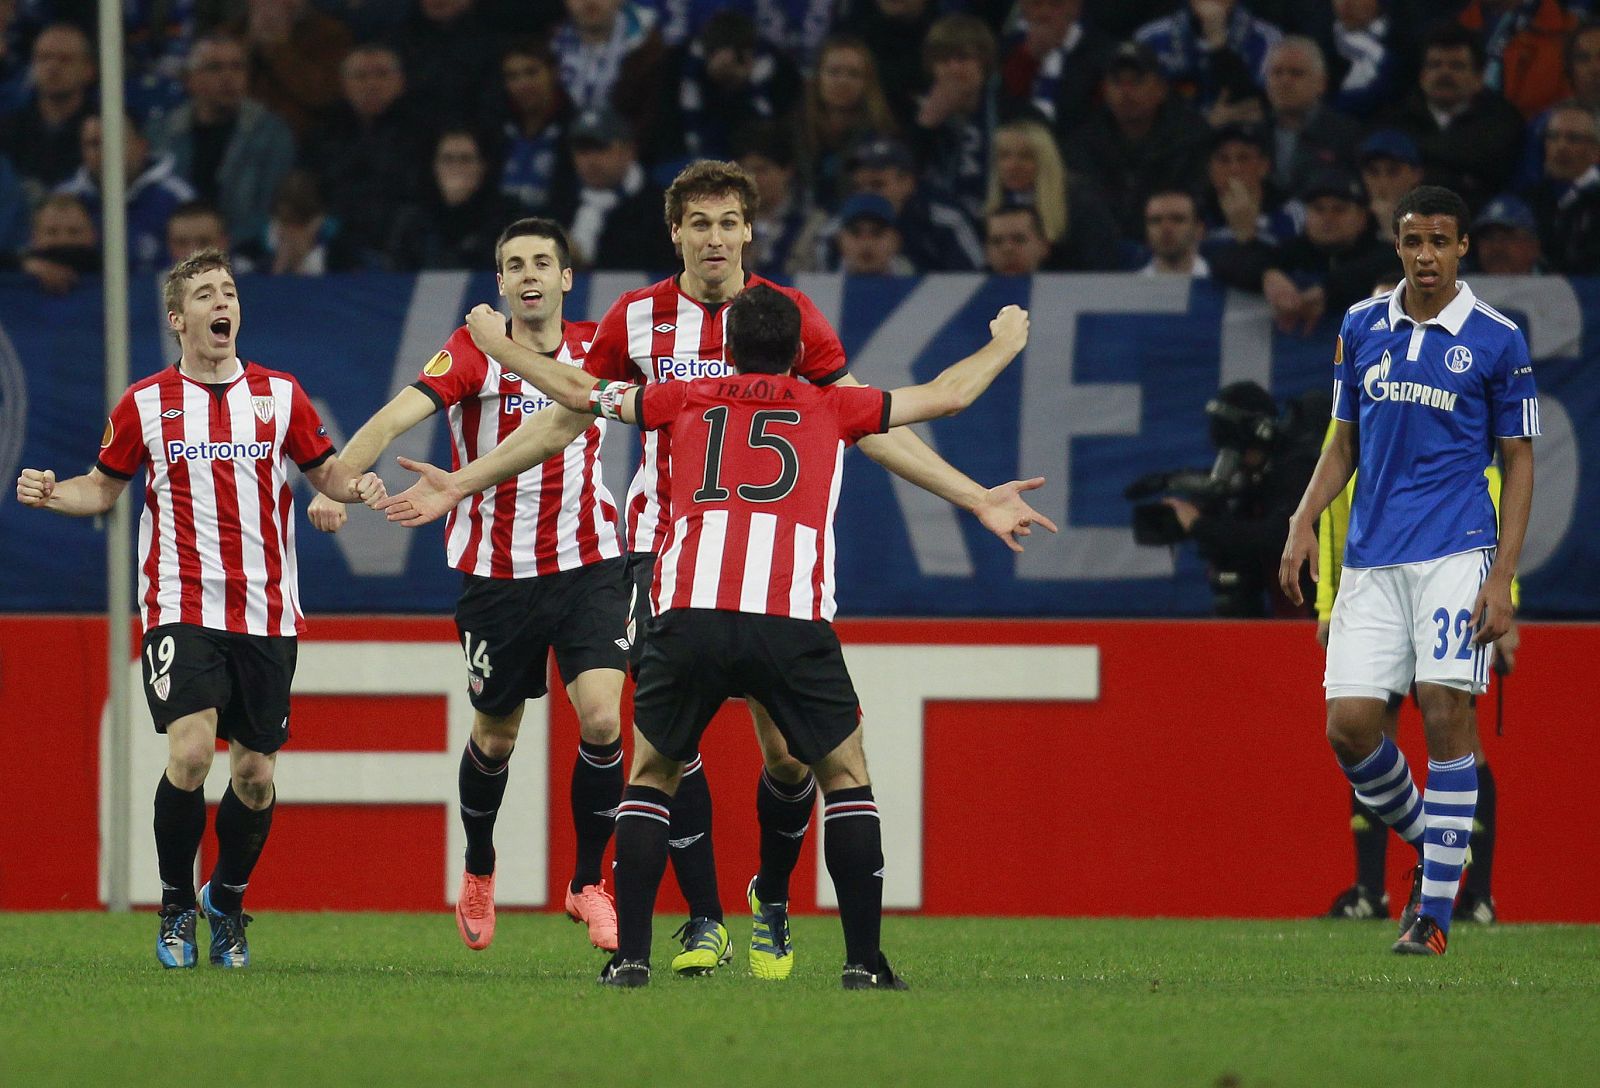 Athletic Bilbao's Llorente and Iraola celebrate a goal against Schalke 04 during the Europa League quarter-final match in Gelsenkirchen